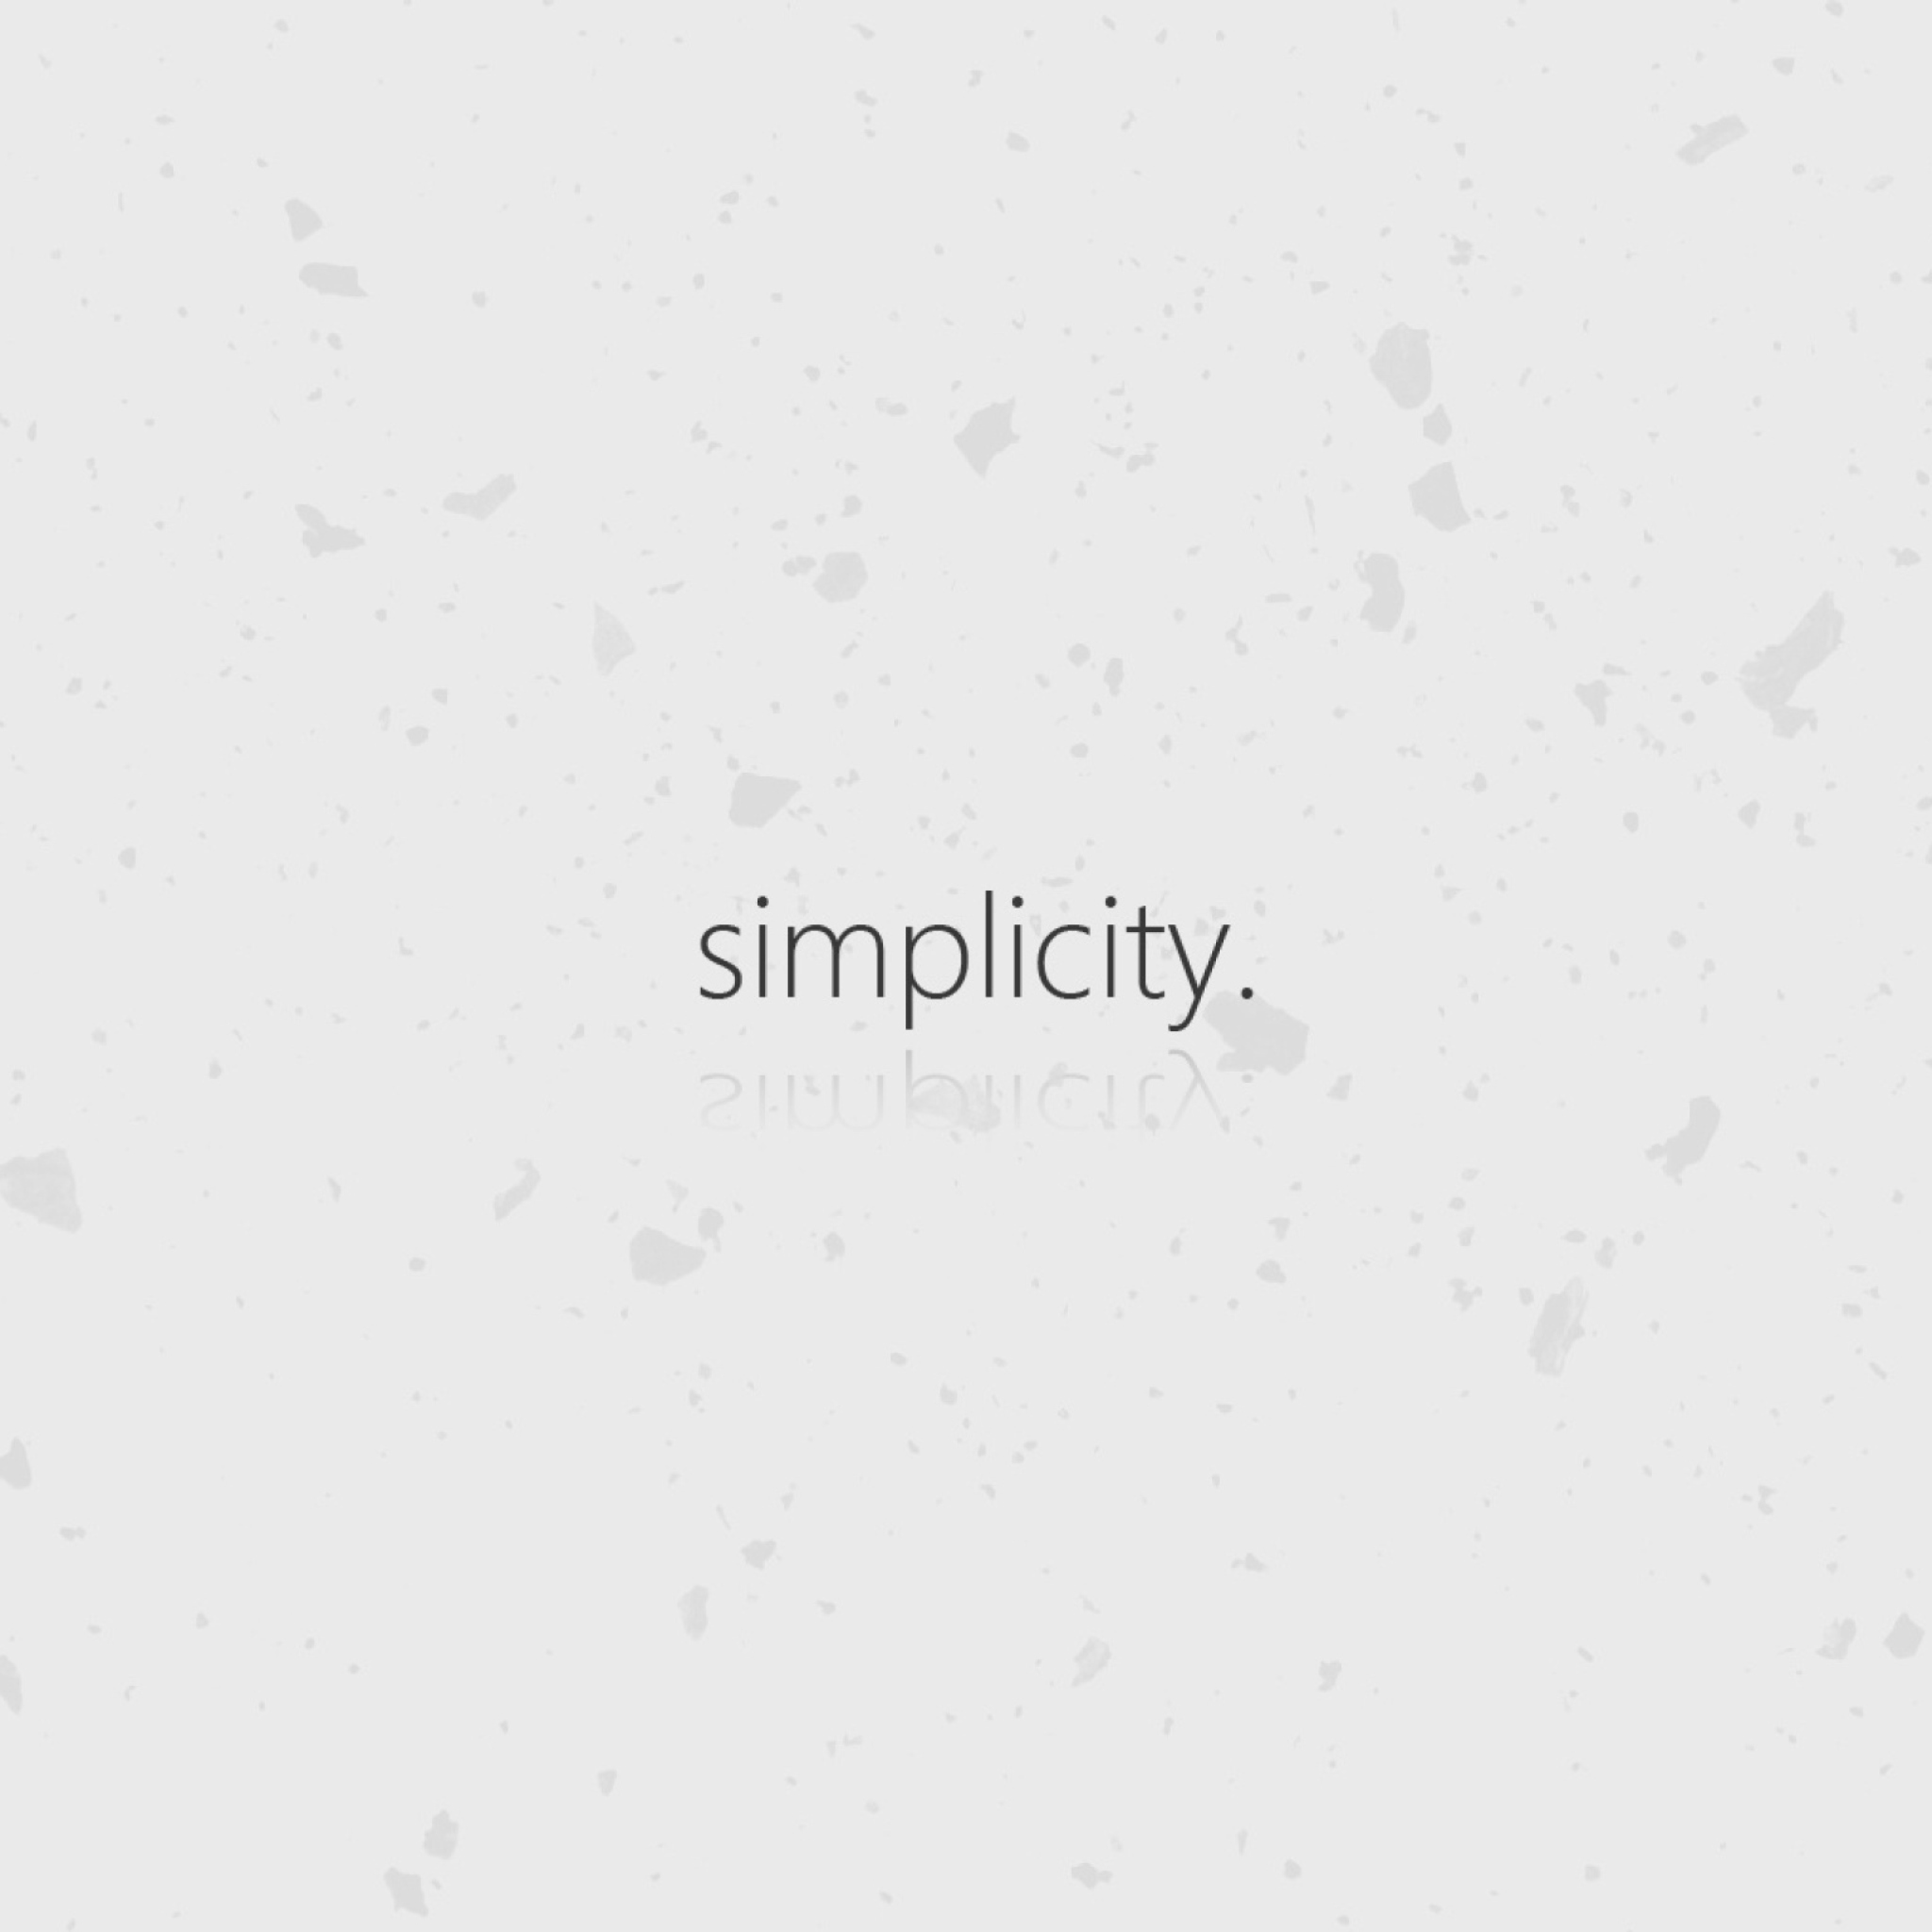 Simplicity wallpaper 2048x2048